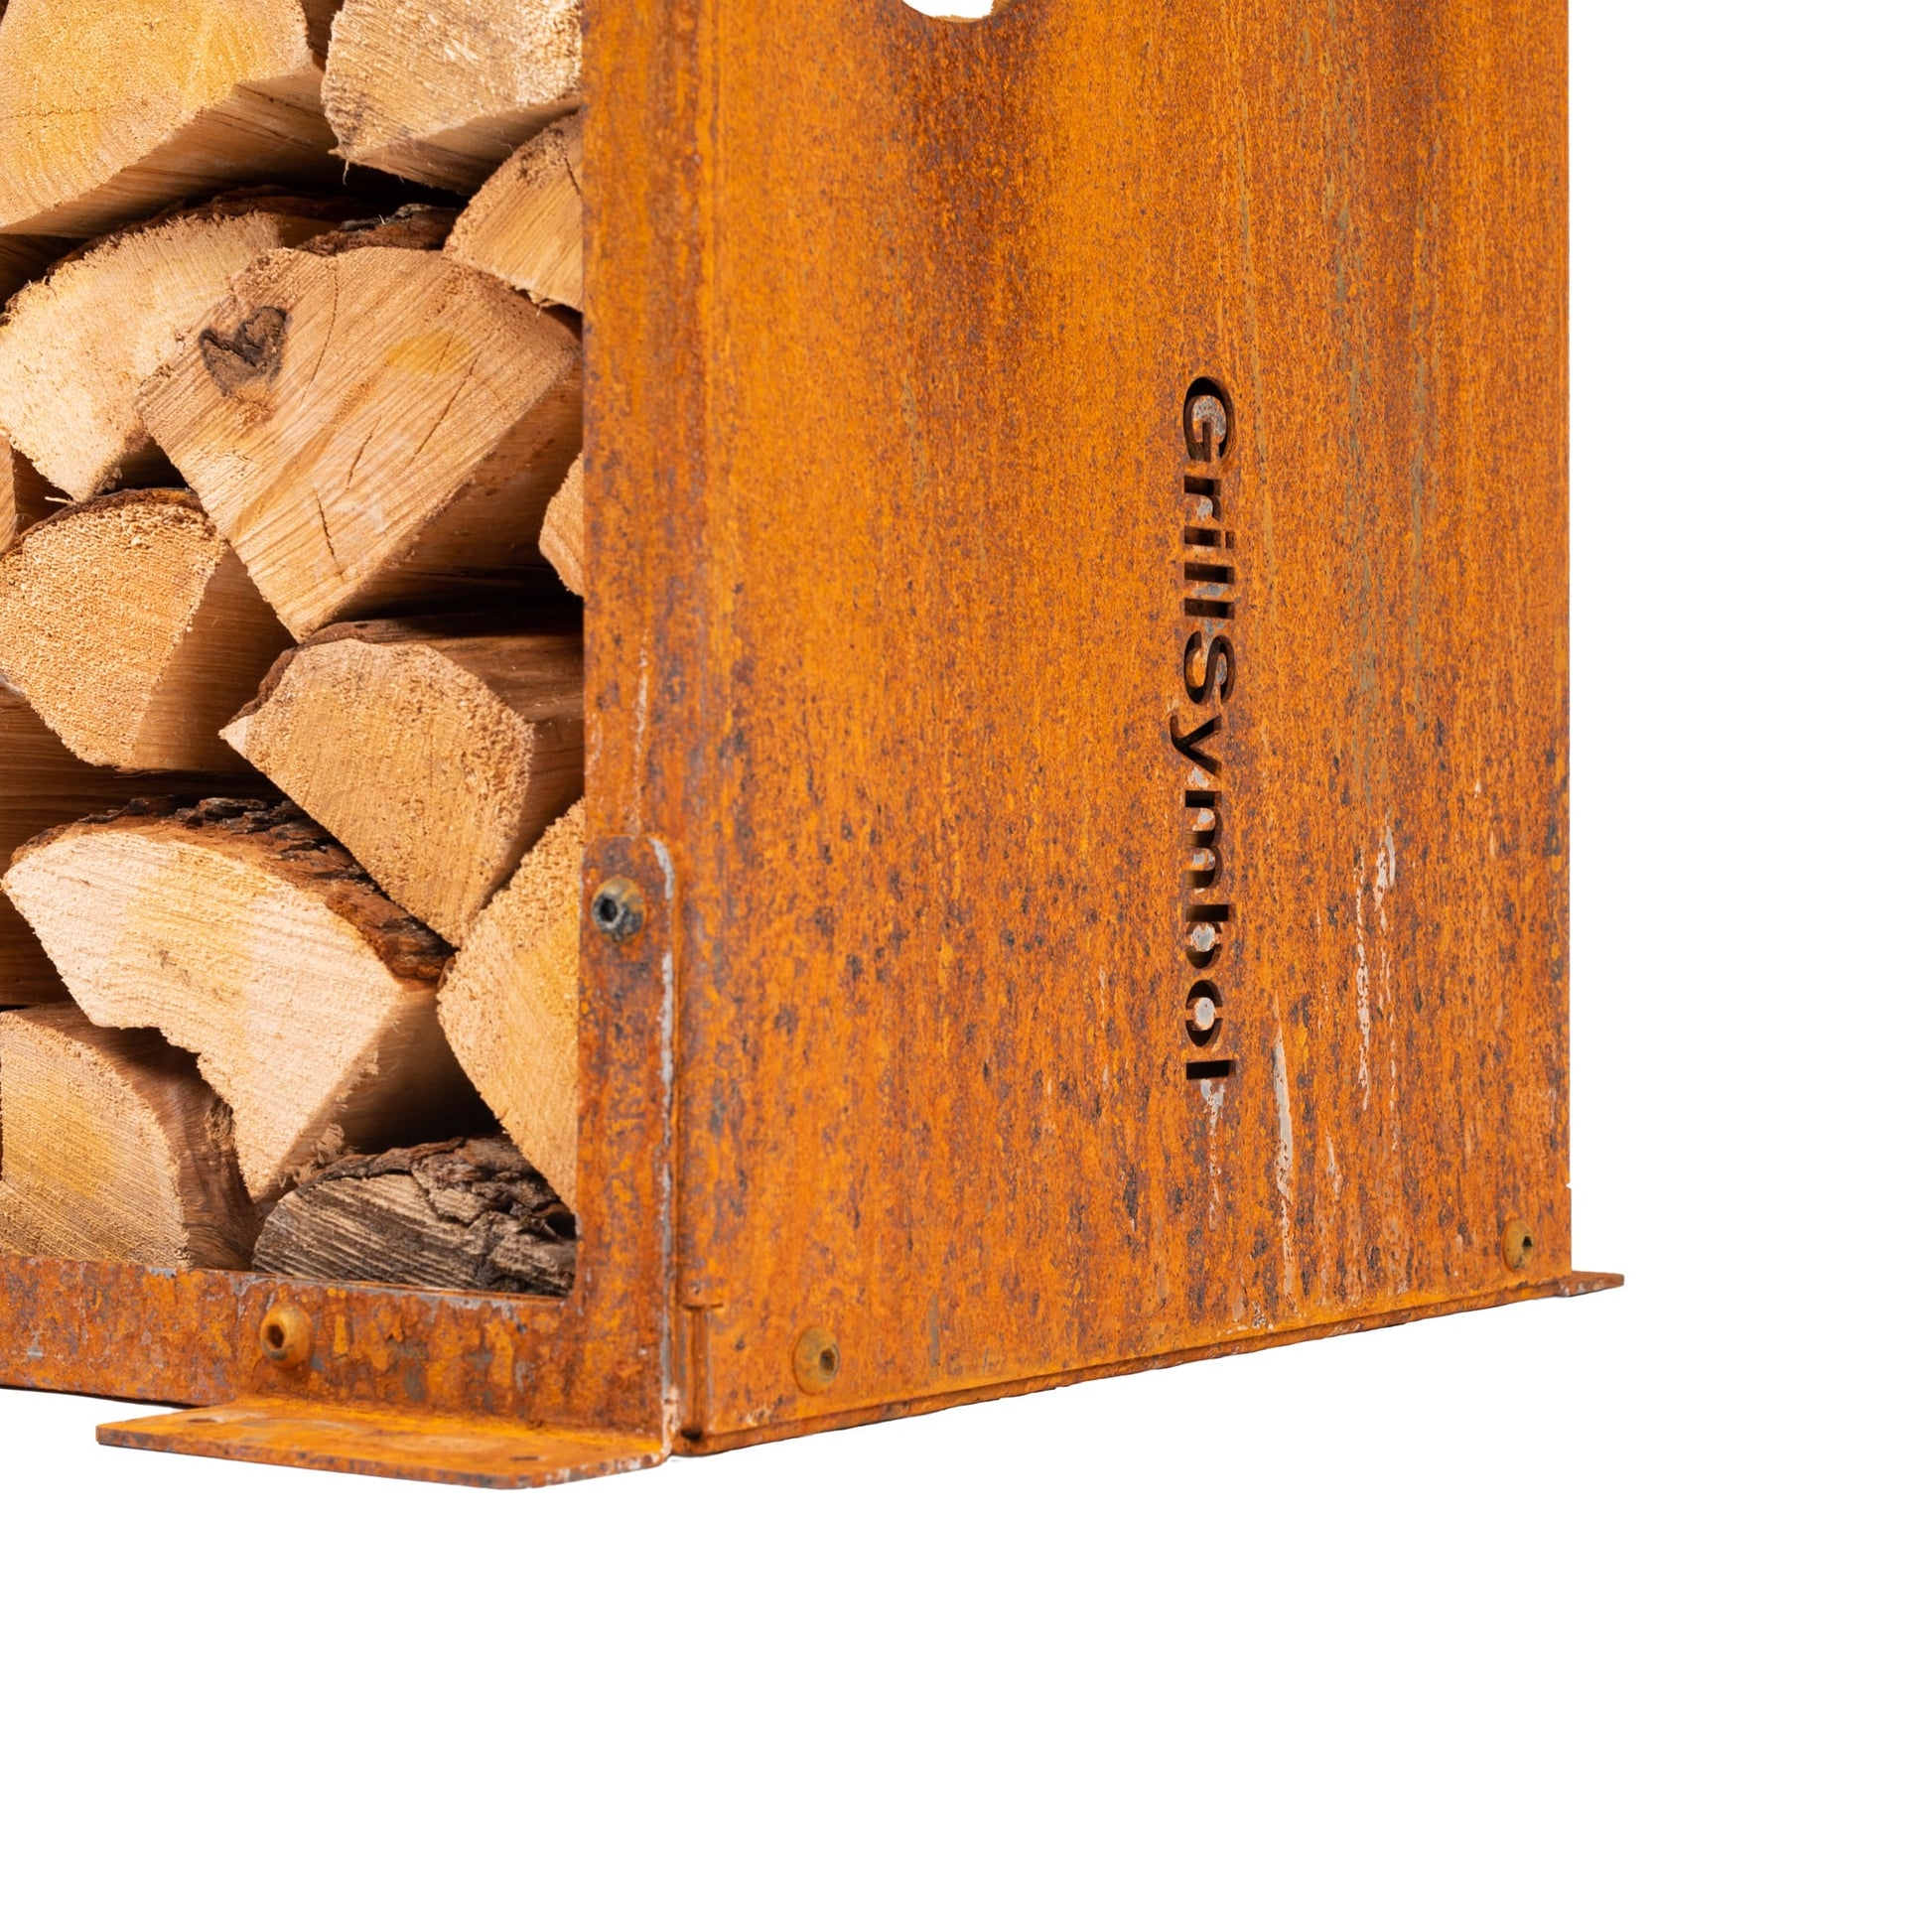 Grill Symbol - Corten Steel Firewood Rack WoodStock M 60*37*106 cm - Timeout Gardens